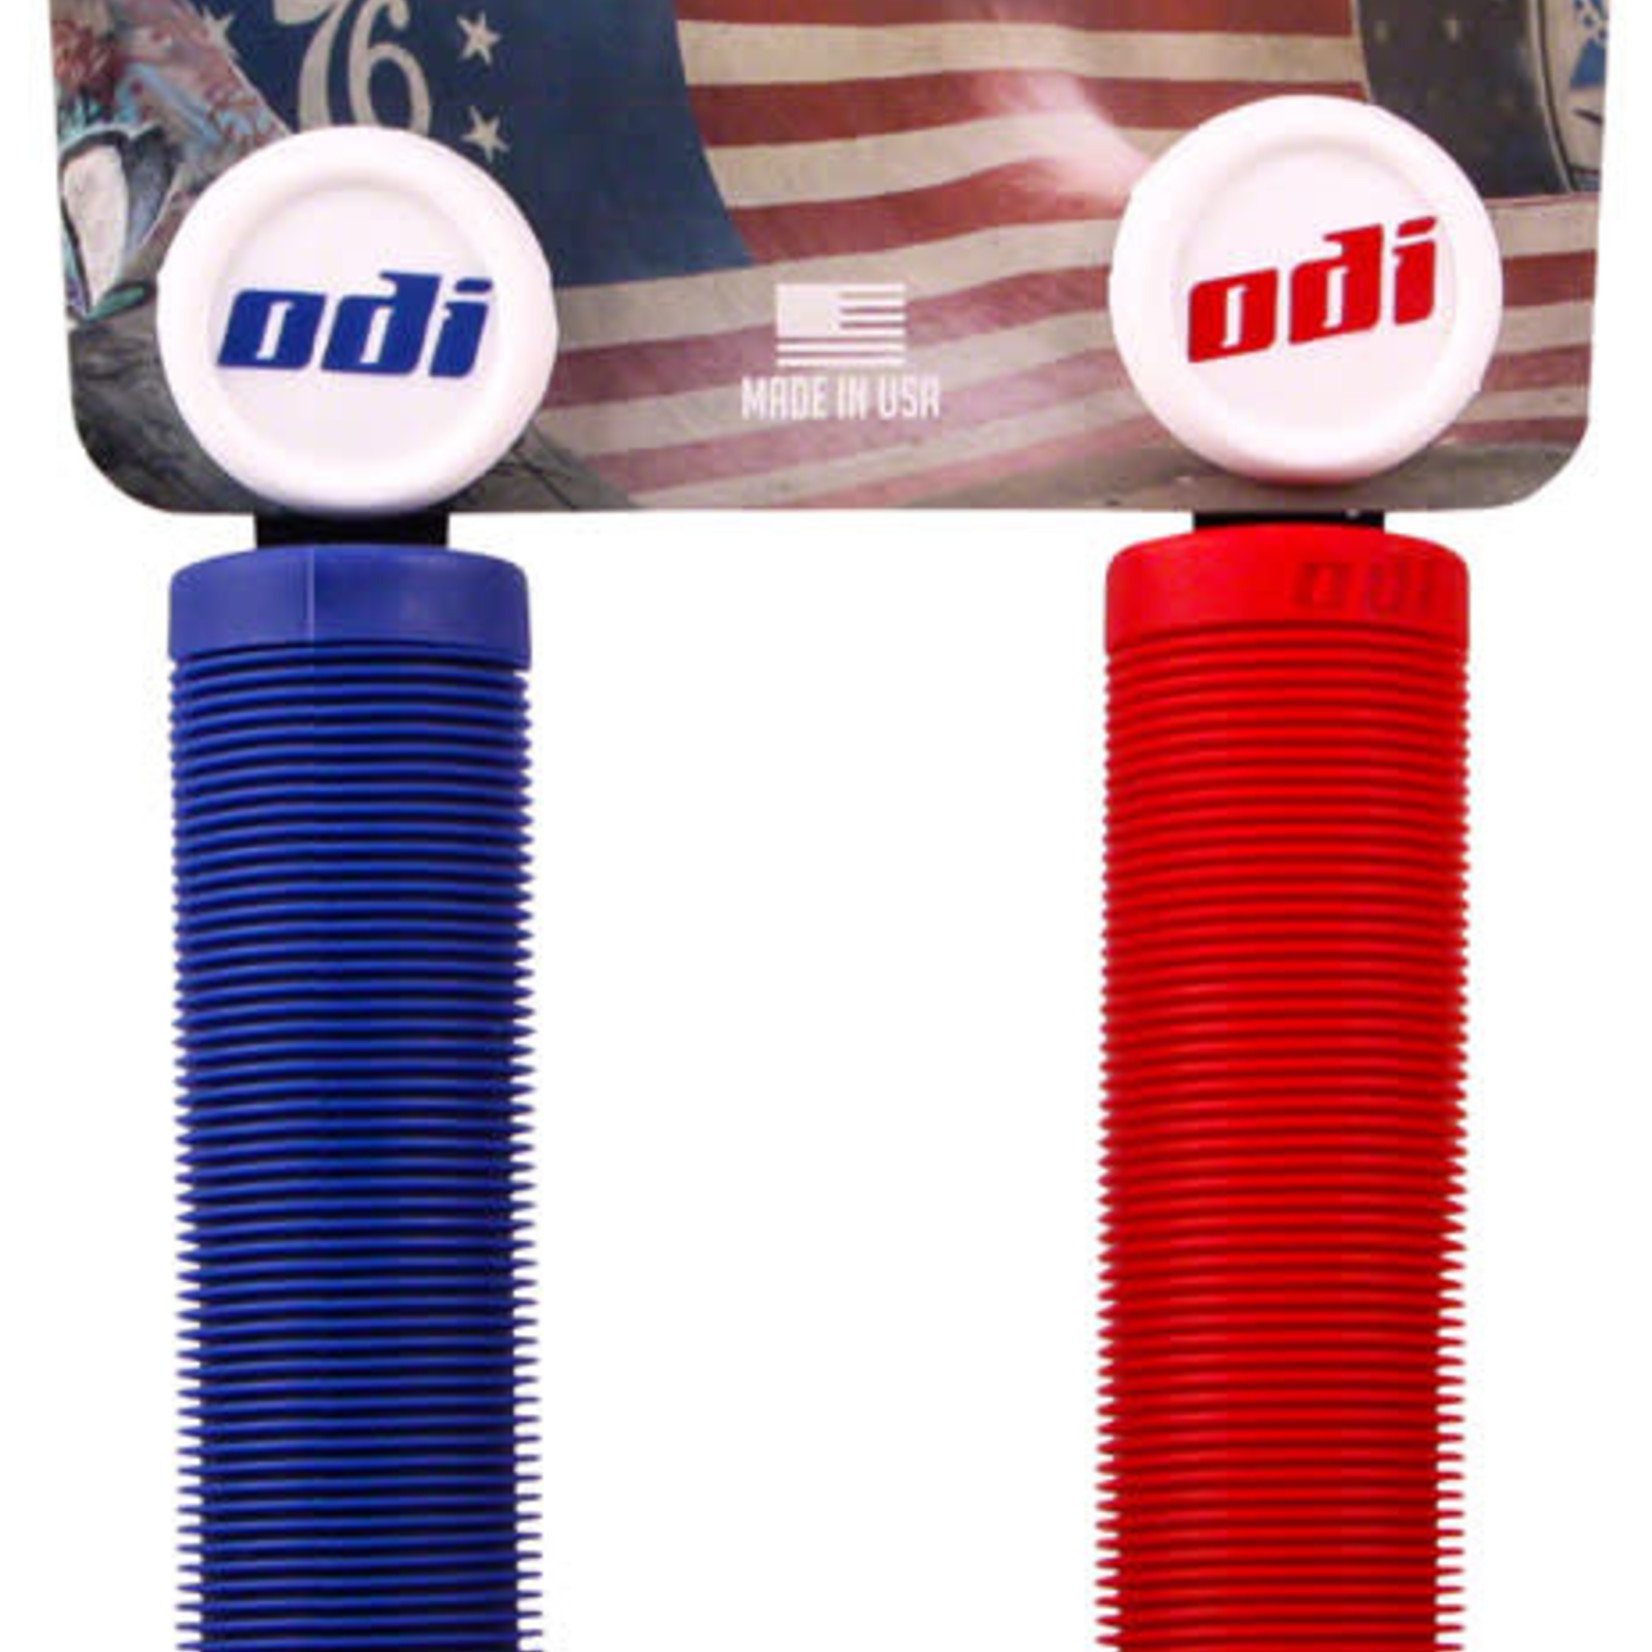 ODI ODI Maiden America Grips - Soft Compound, Longneck, Red/White/Blue